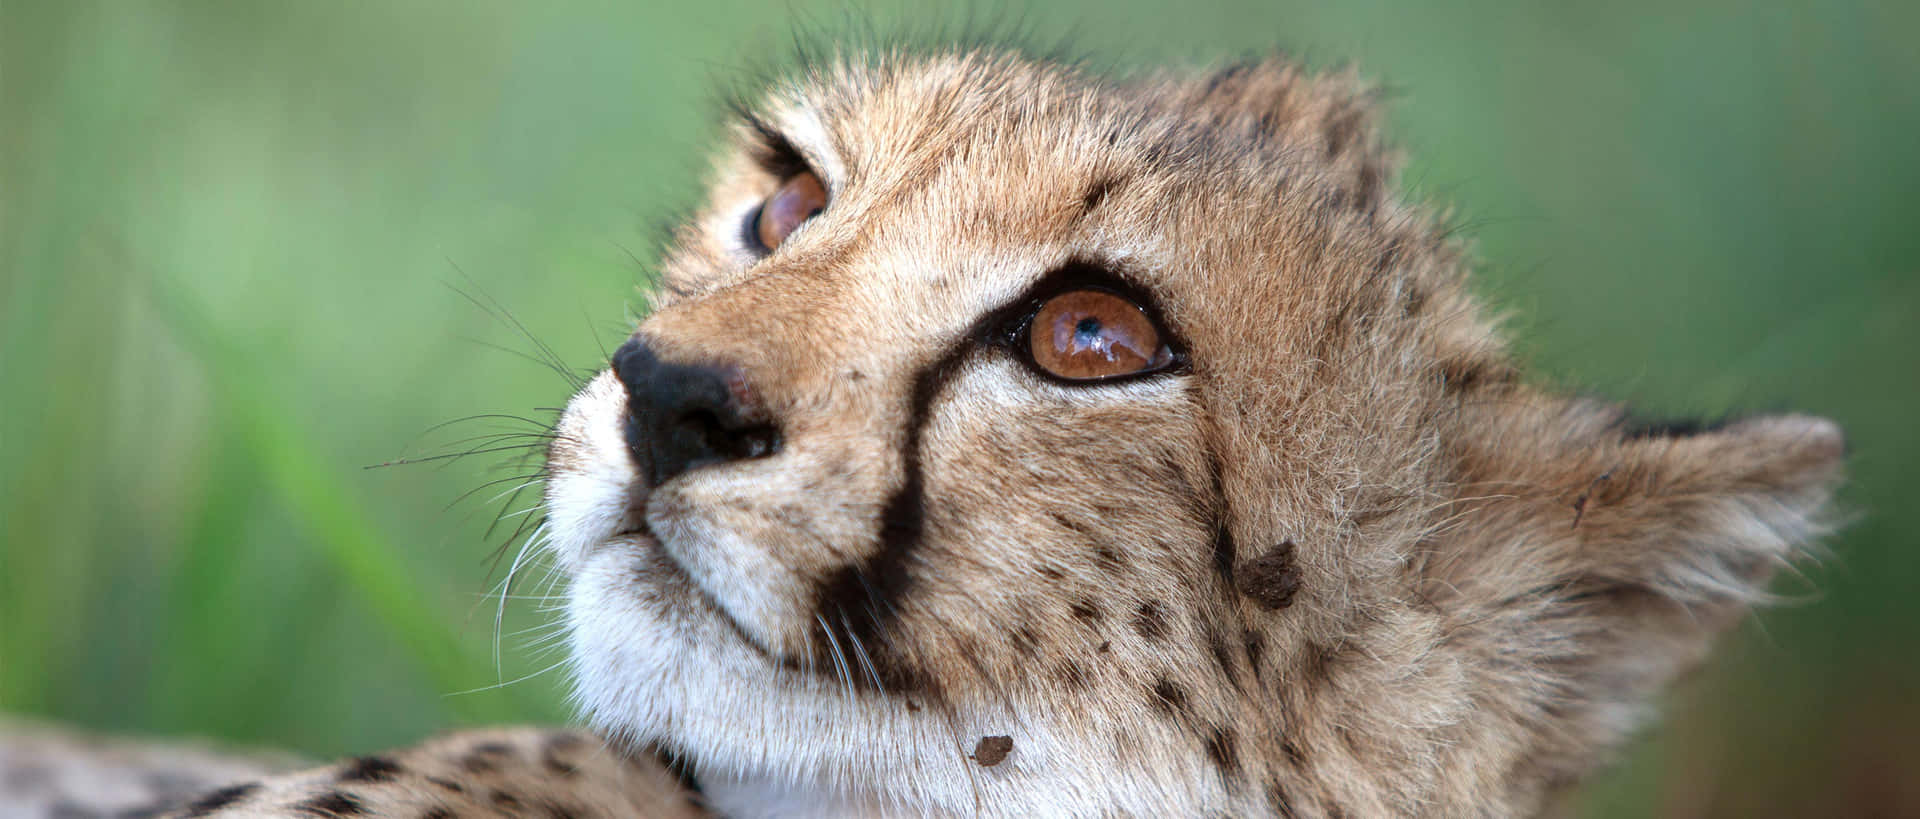 Cheetah Safari Wild Animal Picture